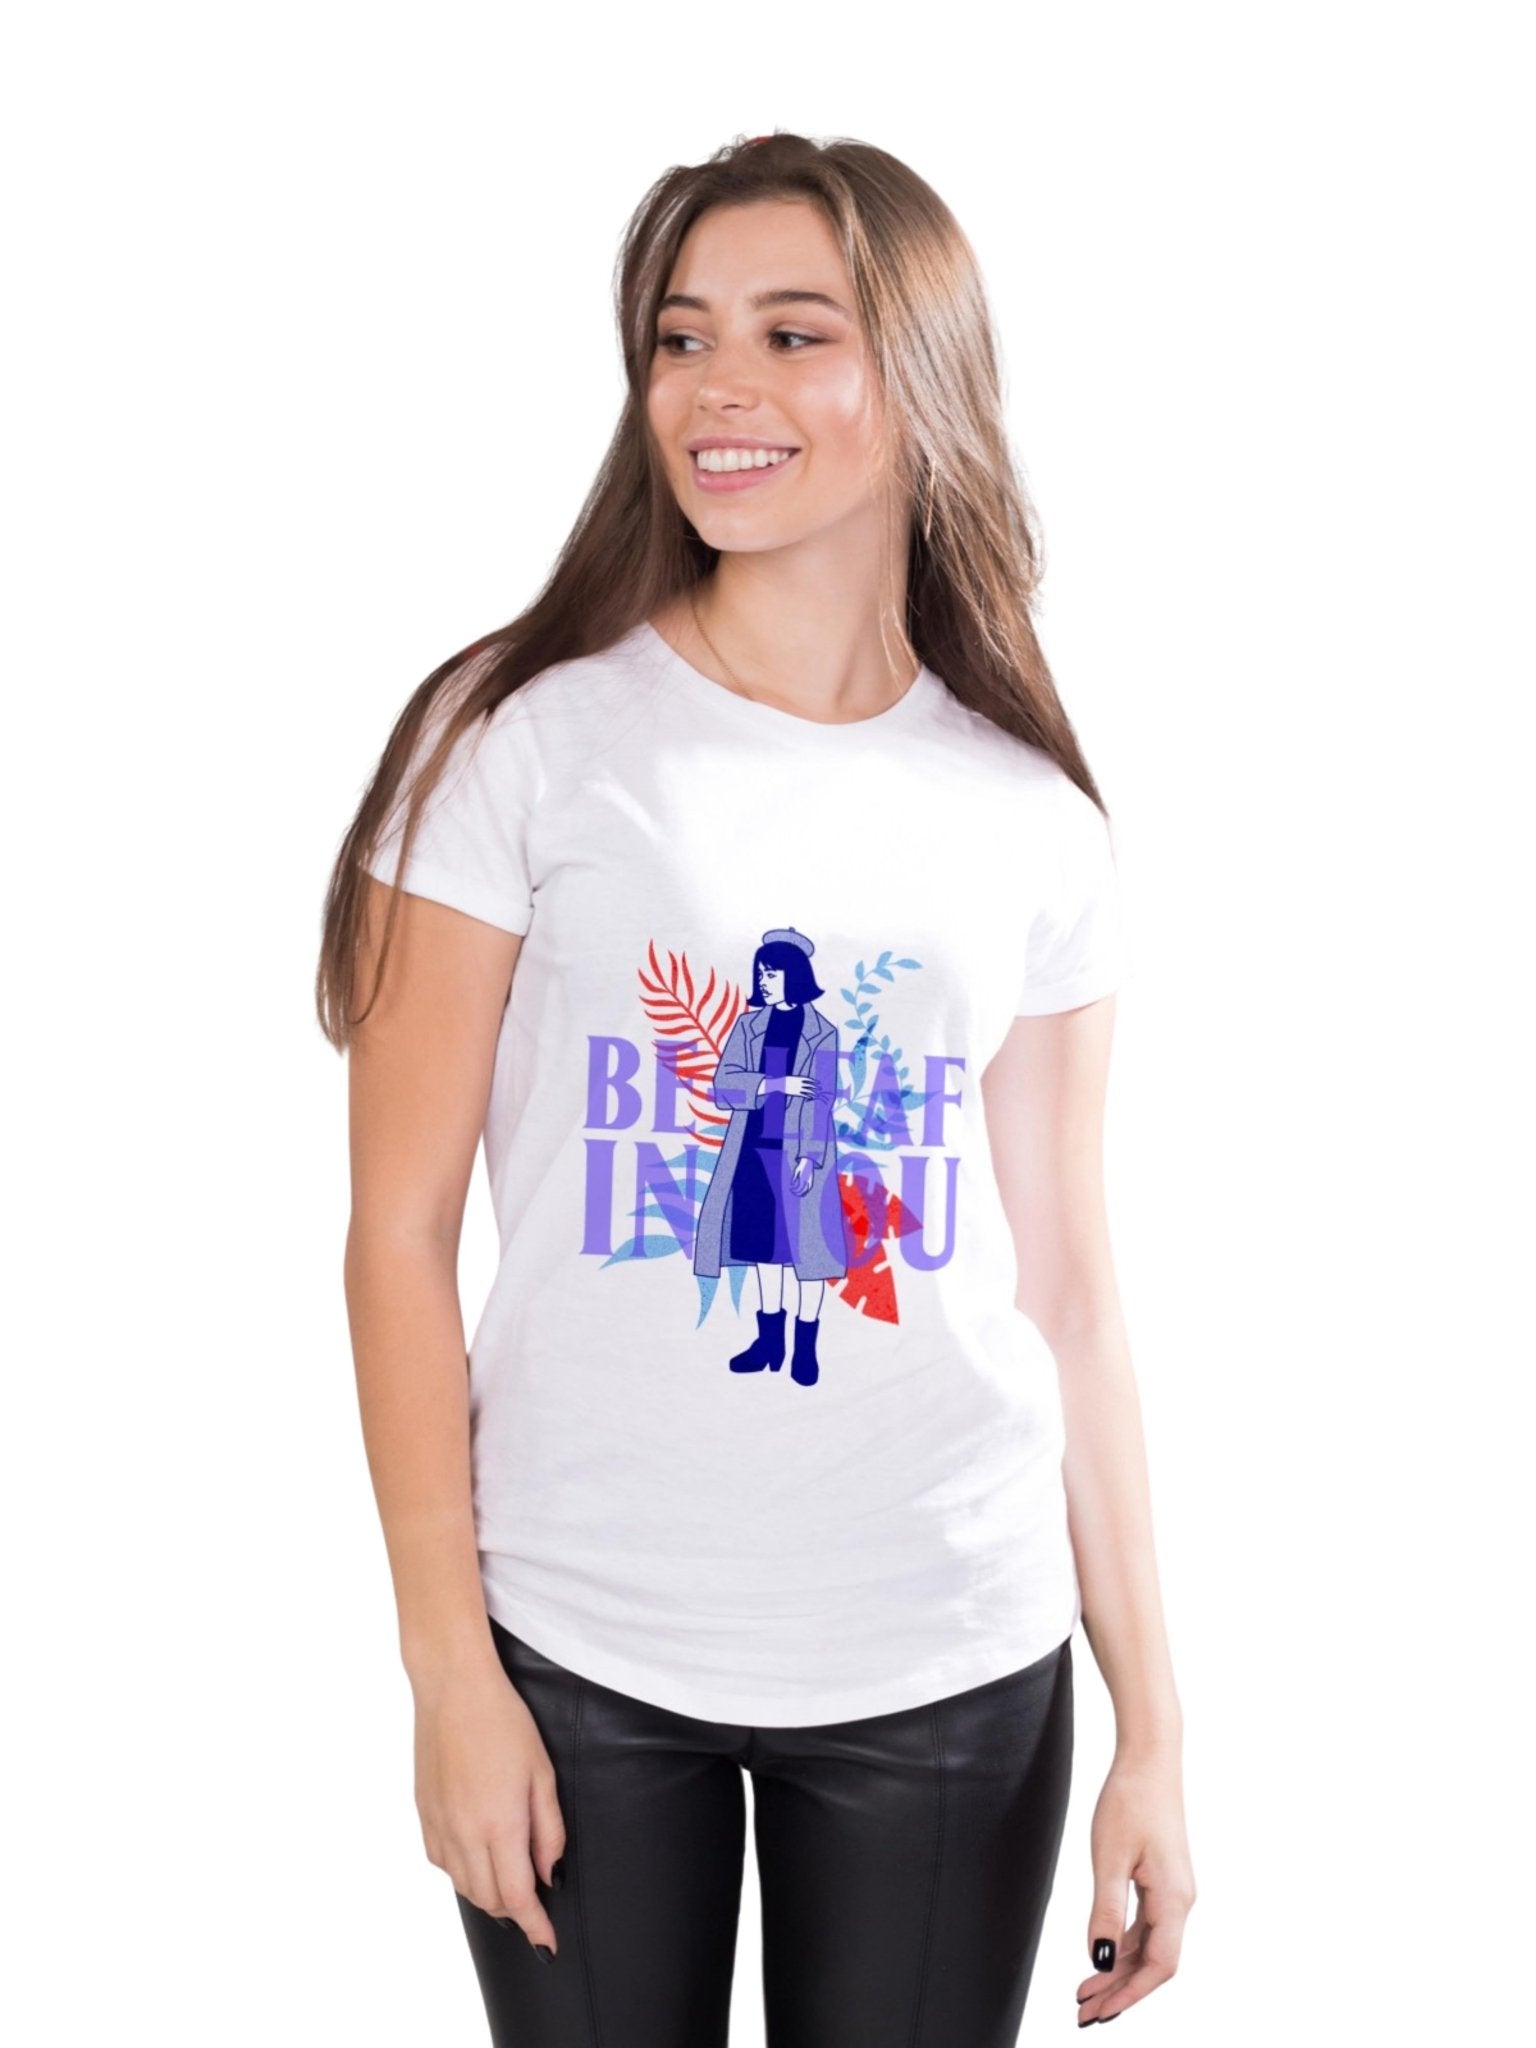 Beleaf in you Regular Women's T-Shirt - Hush and Wear